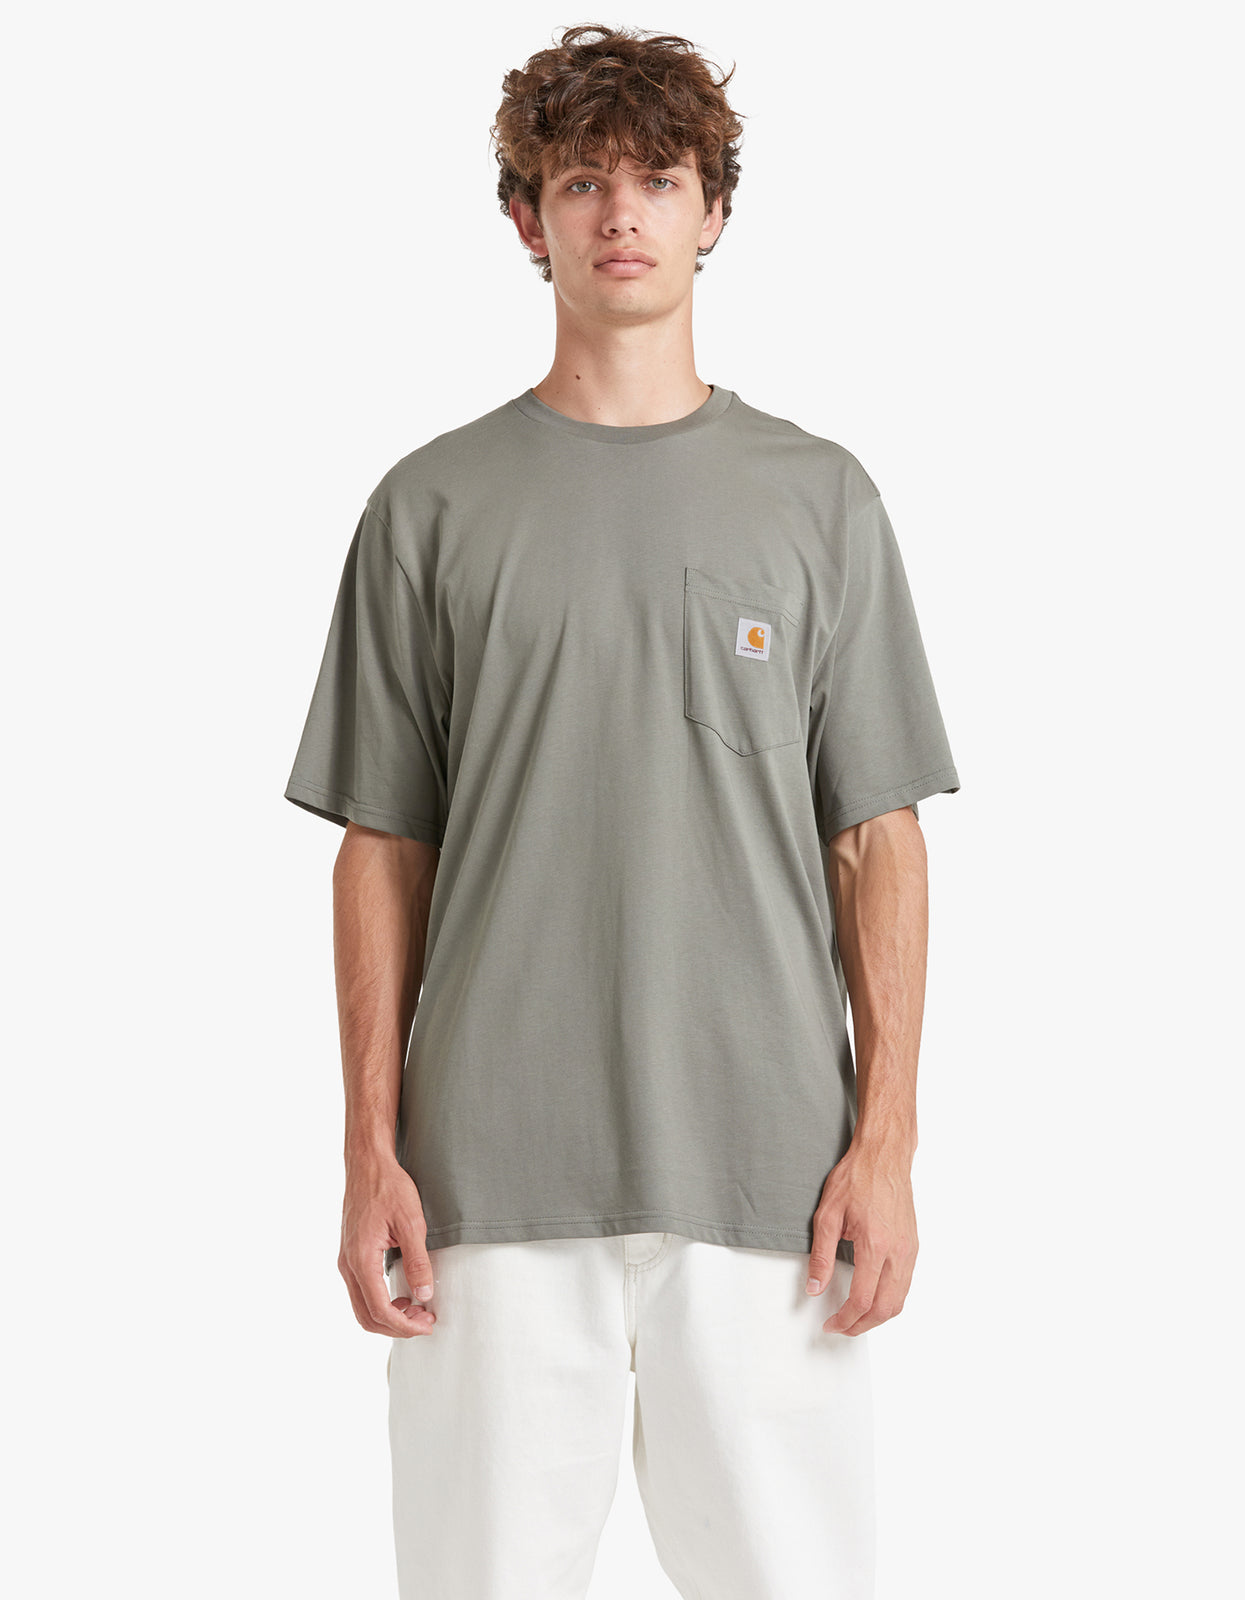 Superette | S/S Pocket T-Shirt - Smoke Green